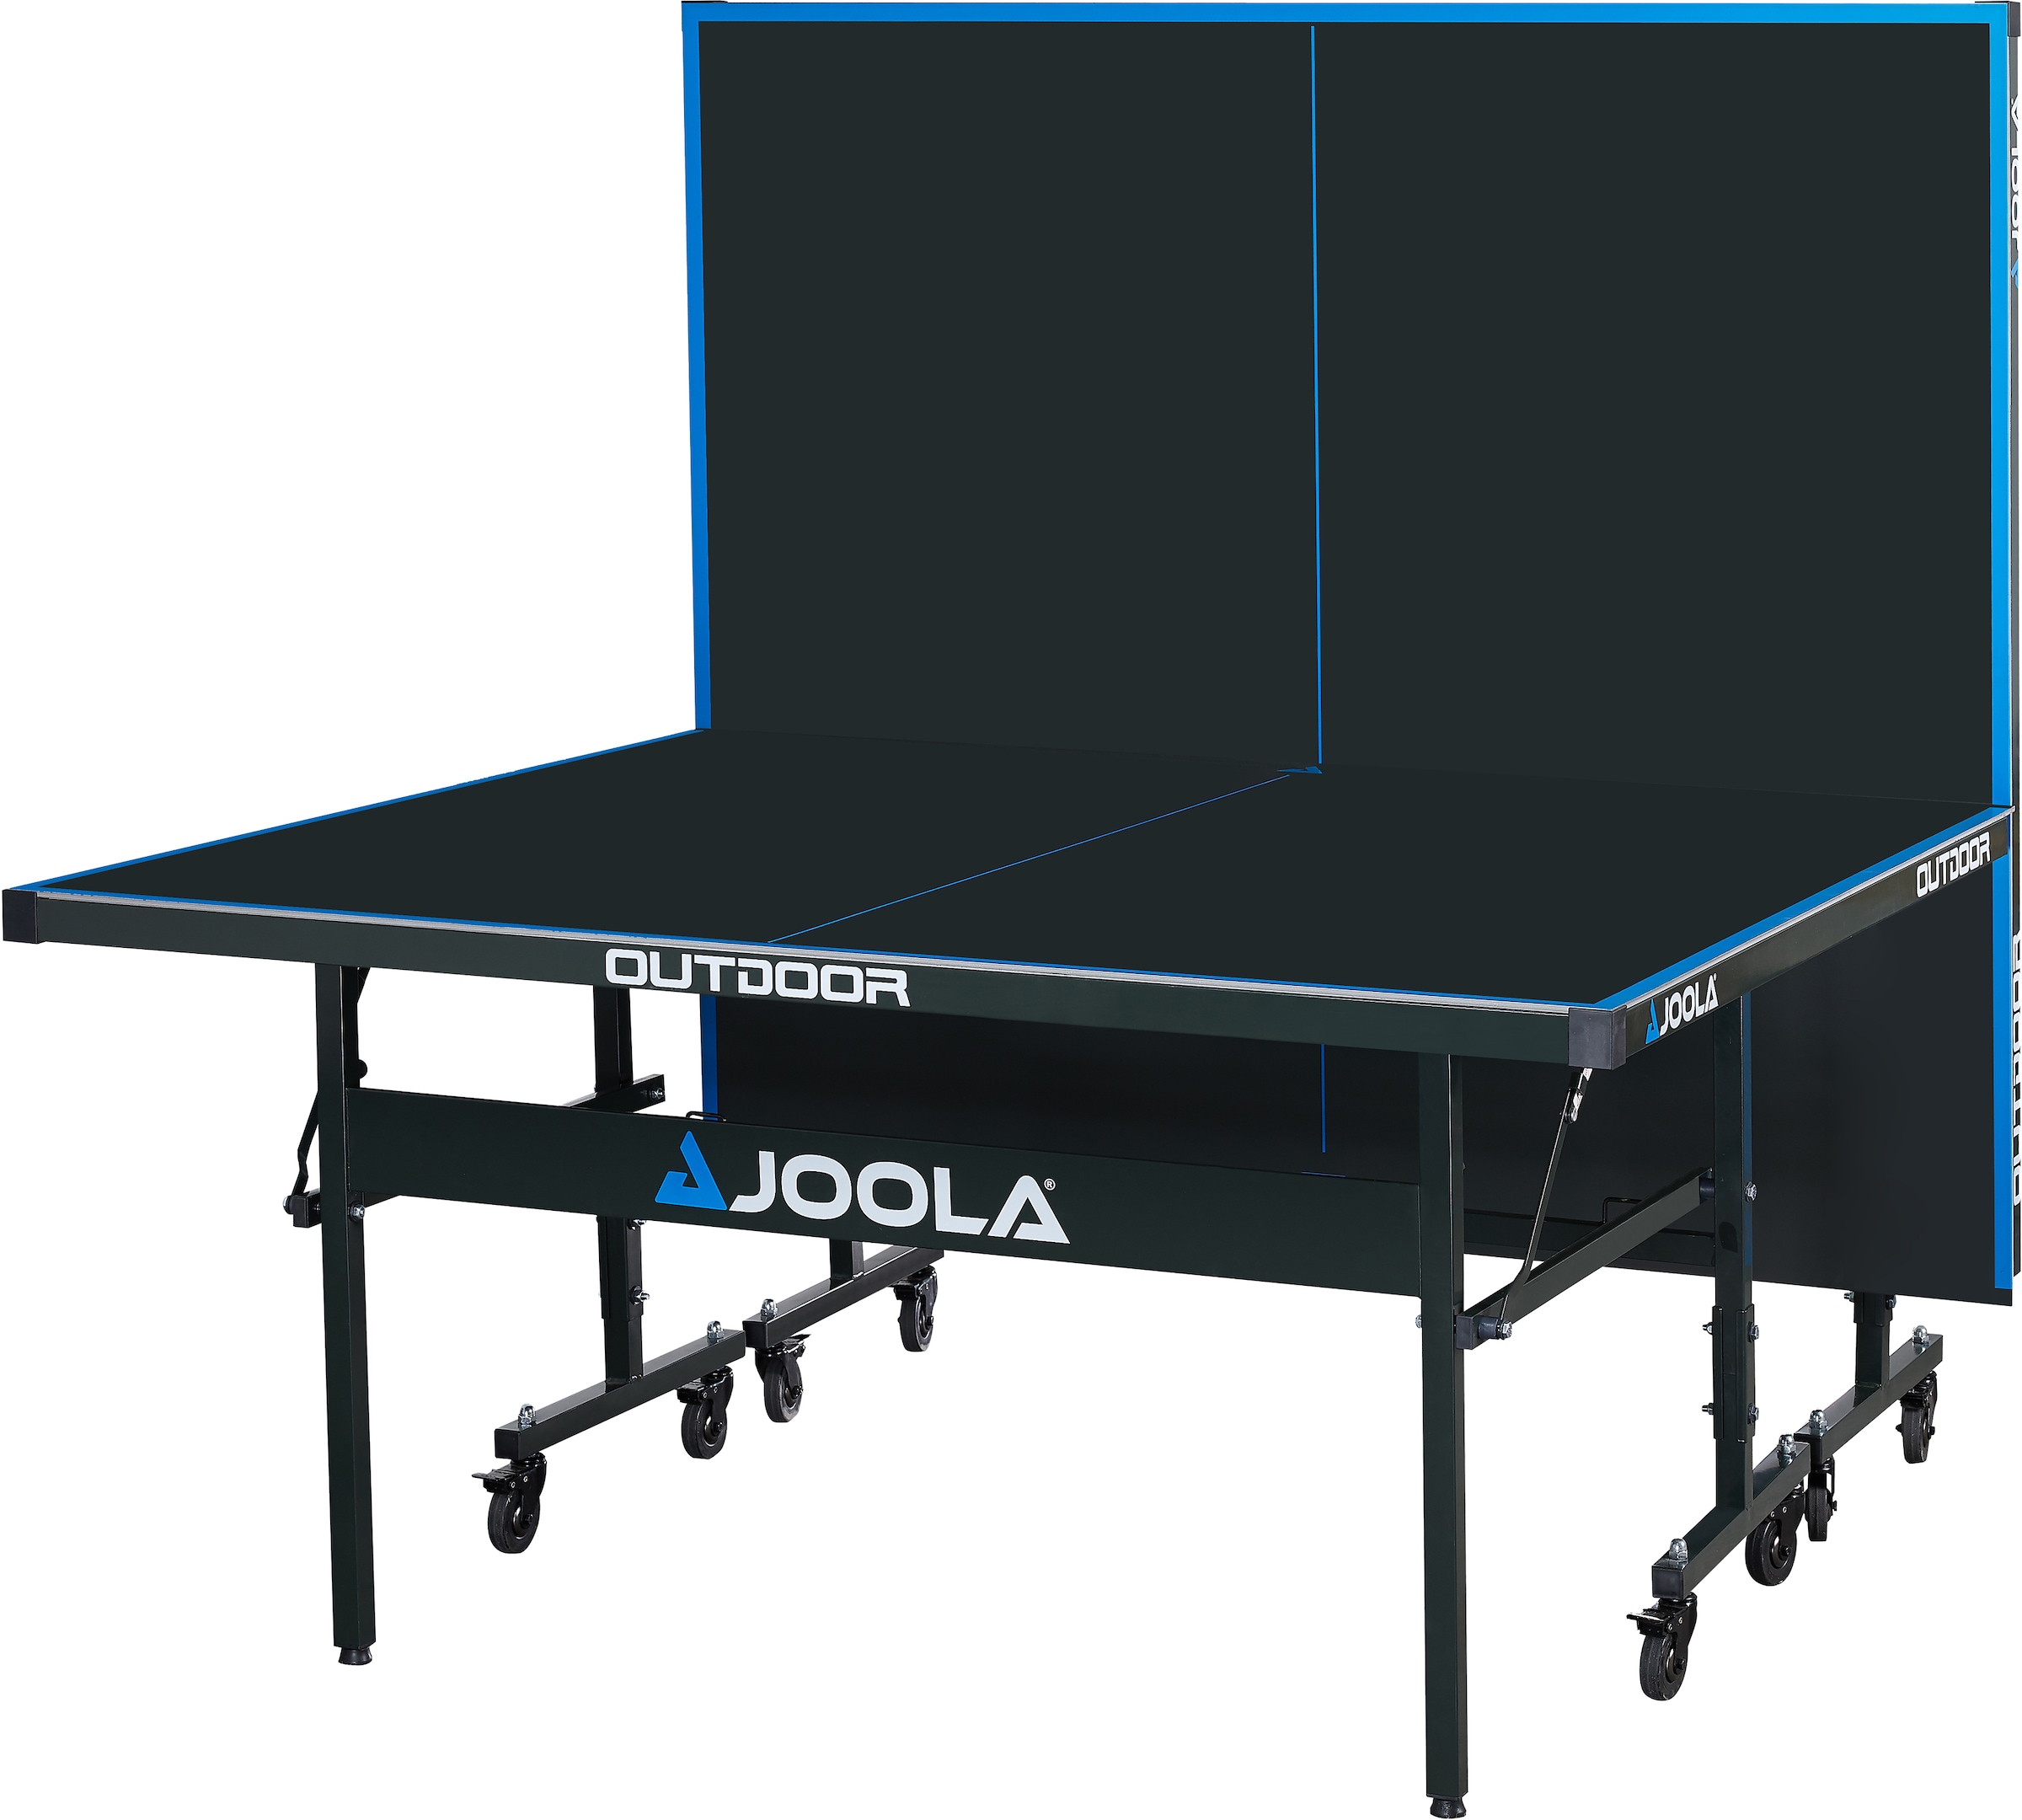 Joola Tischtennisplatte »OUTDOOR J200A«